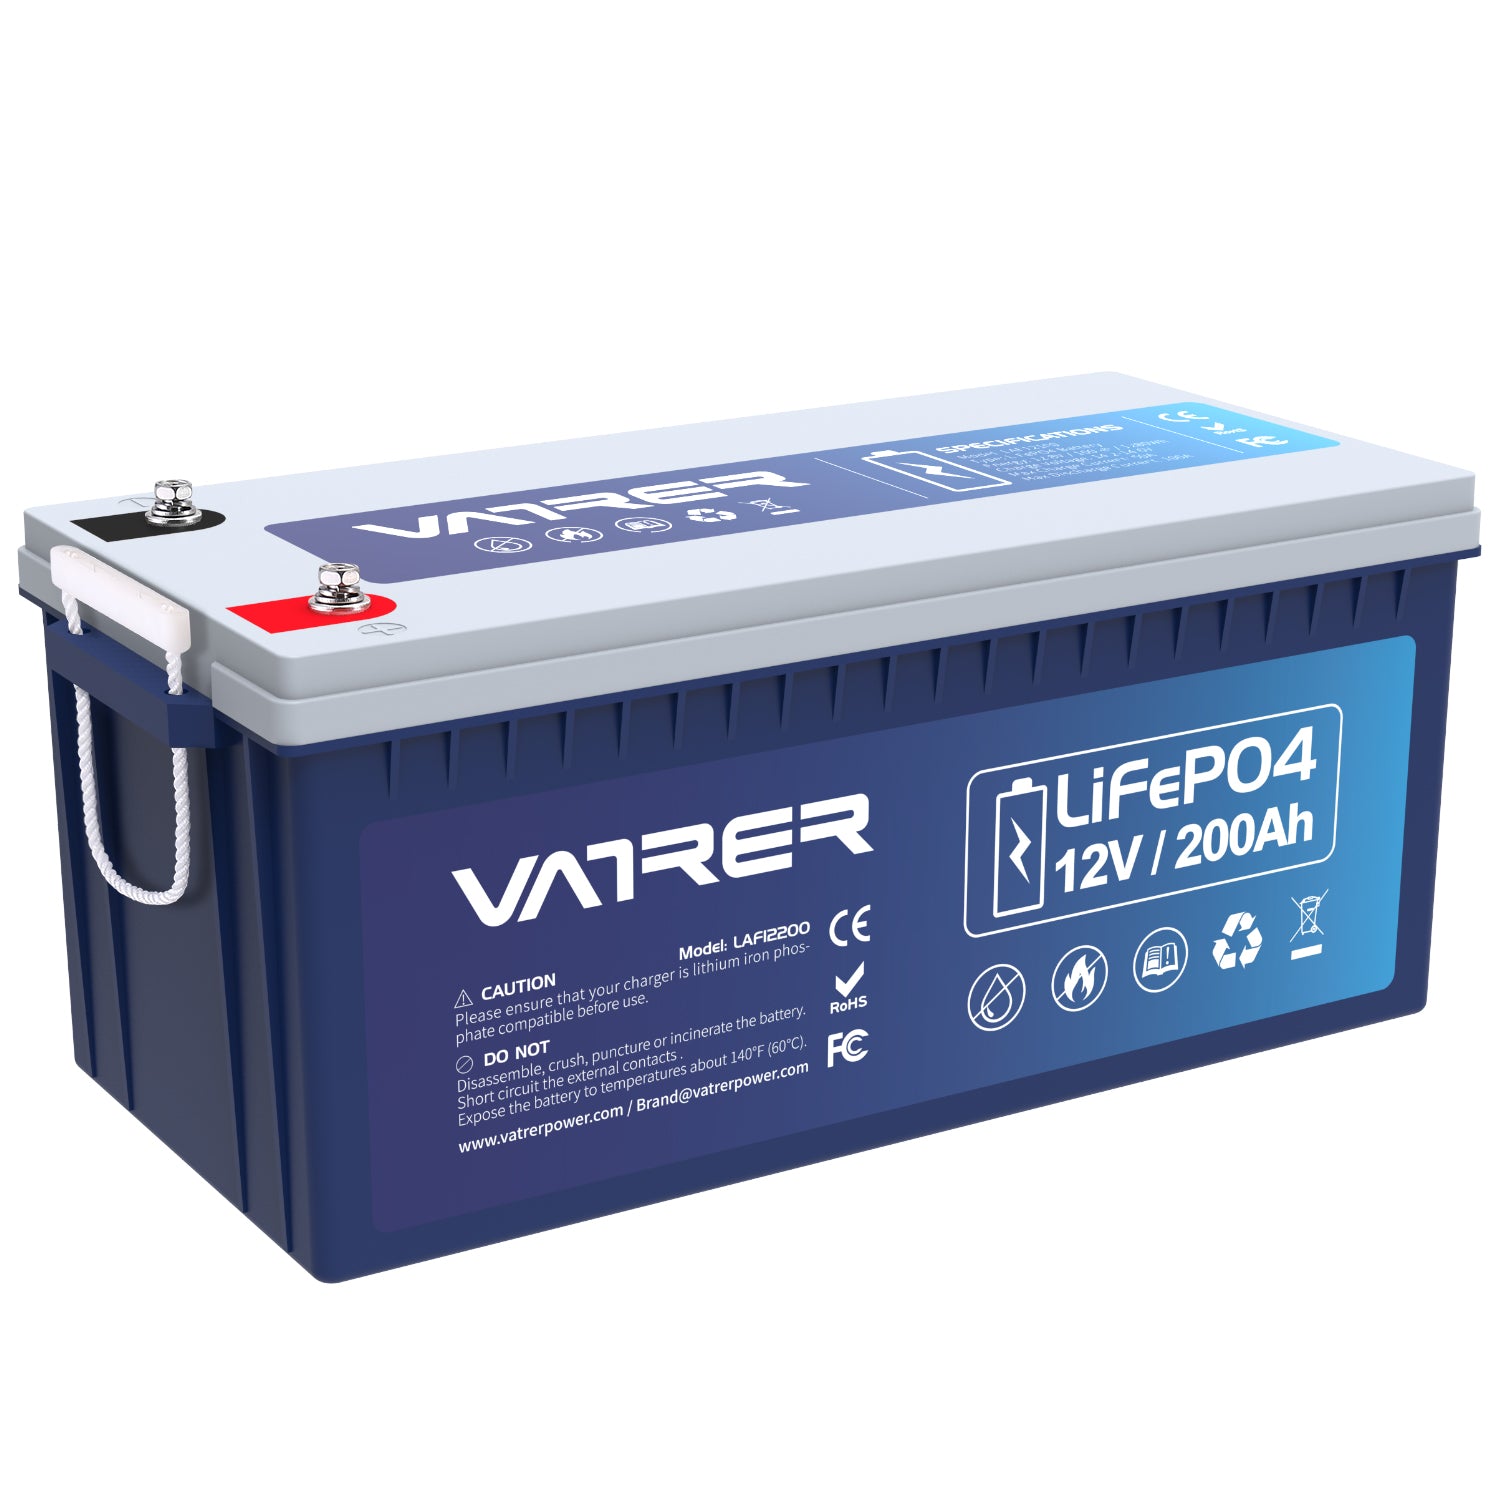 <tc>Vatrer</tc> 12 V 200 Ah LiFePO4-Lithiumbatterie, integriertes 100 A BMS und LiFePO4-Batterien mit Abschaltung bei niedriger Temperatur 12